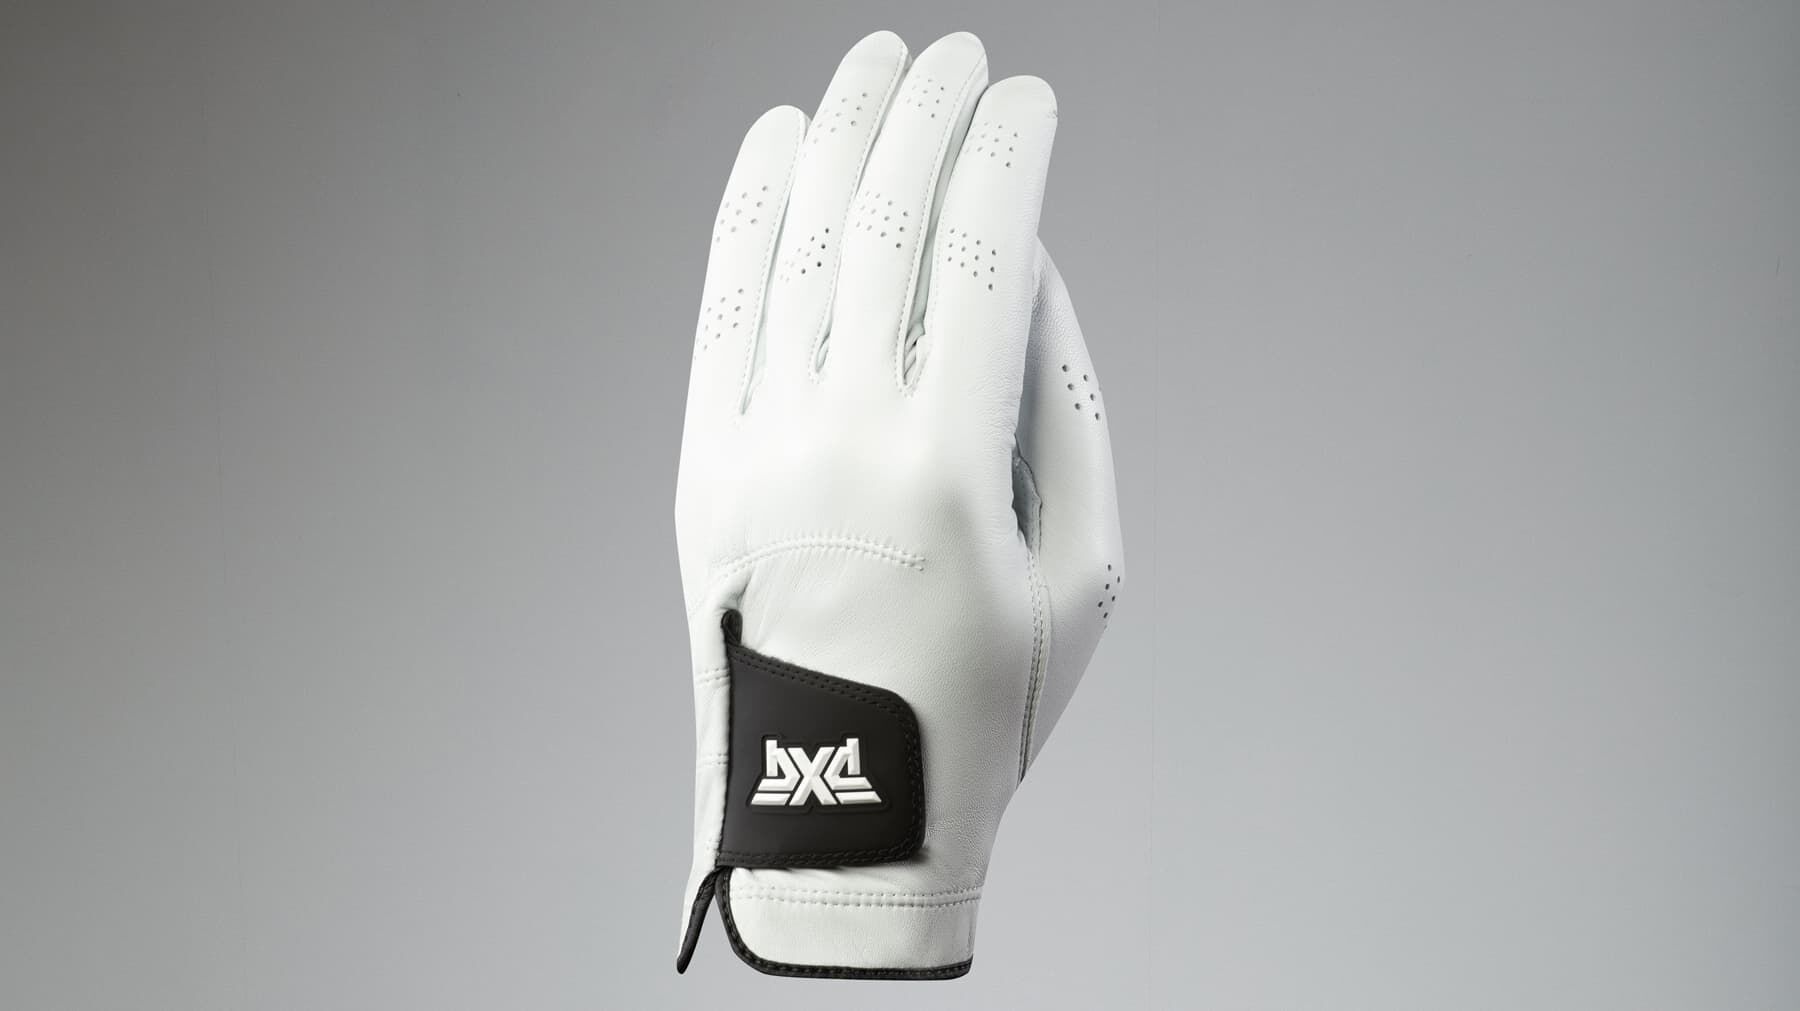 Readers Cricket Cotton Inner Gloves XL 